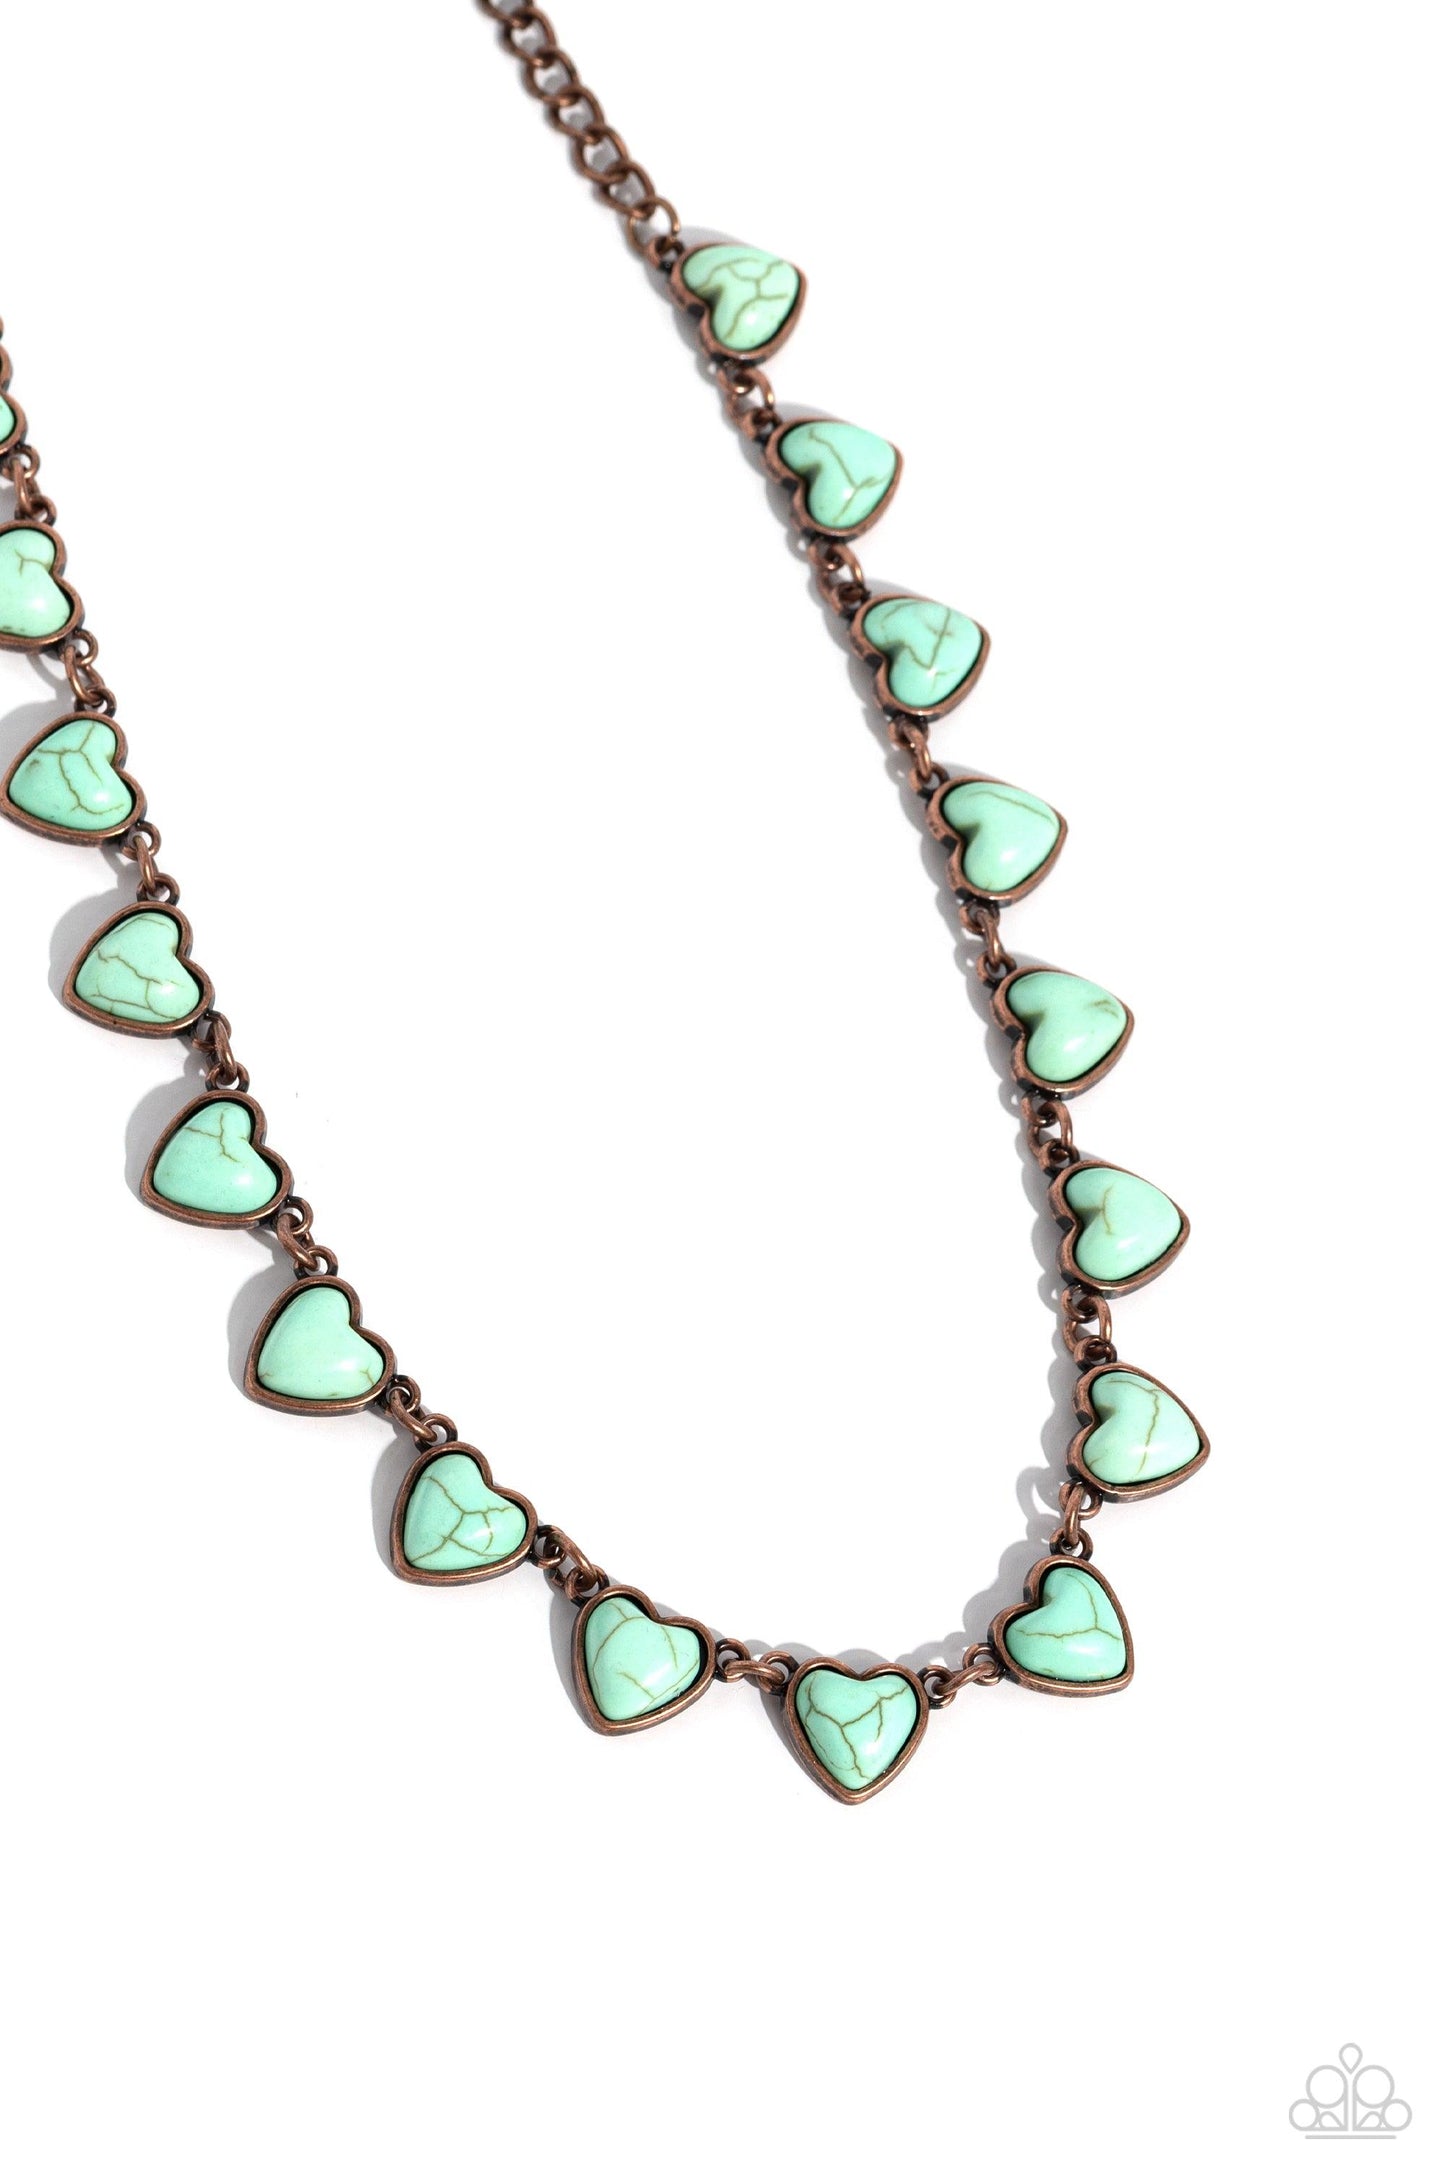 Paparazzi Accessories - Sentimental Stones - Copper Necklace - Bling by JessieK